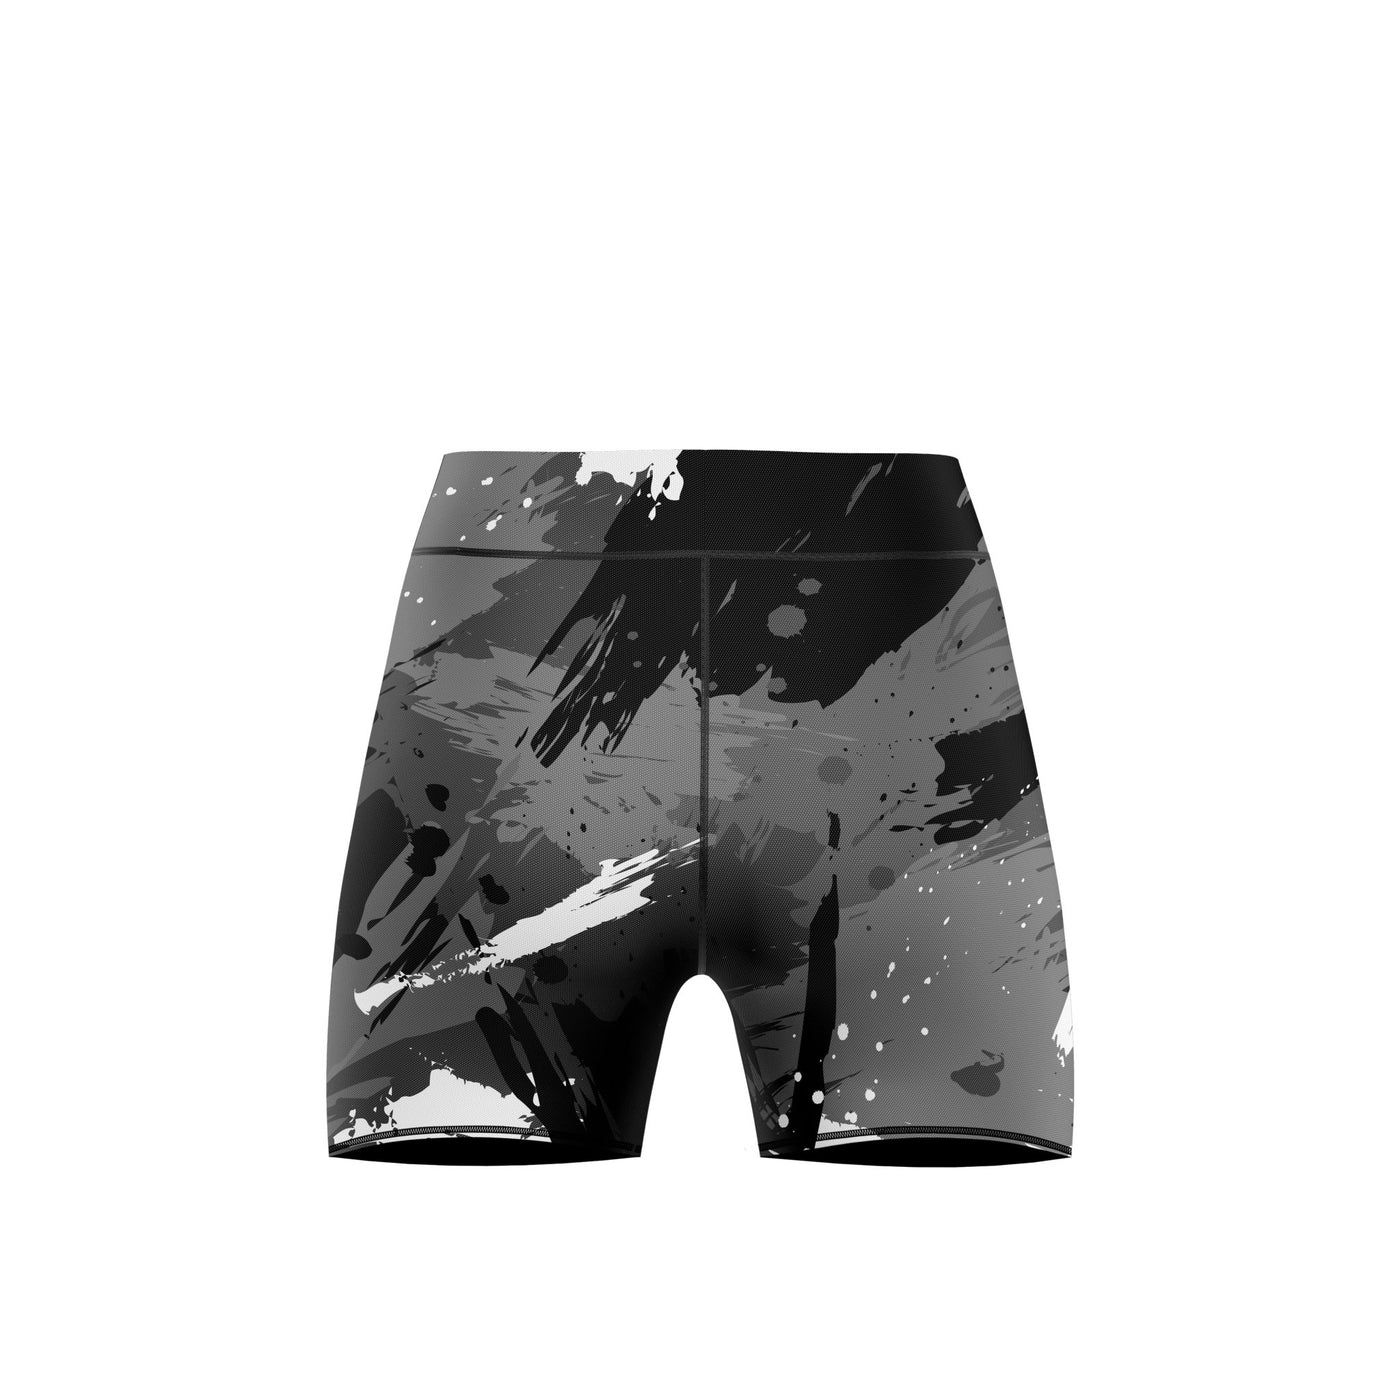 Summo Dark Camo Compression Shorts - Summo Sports